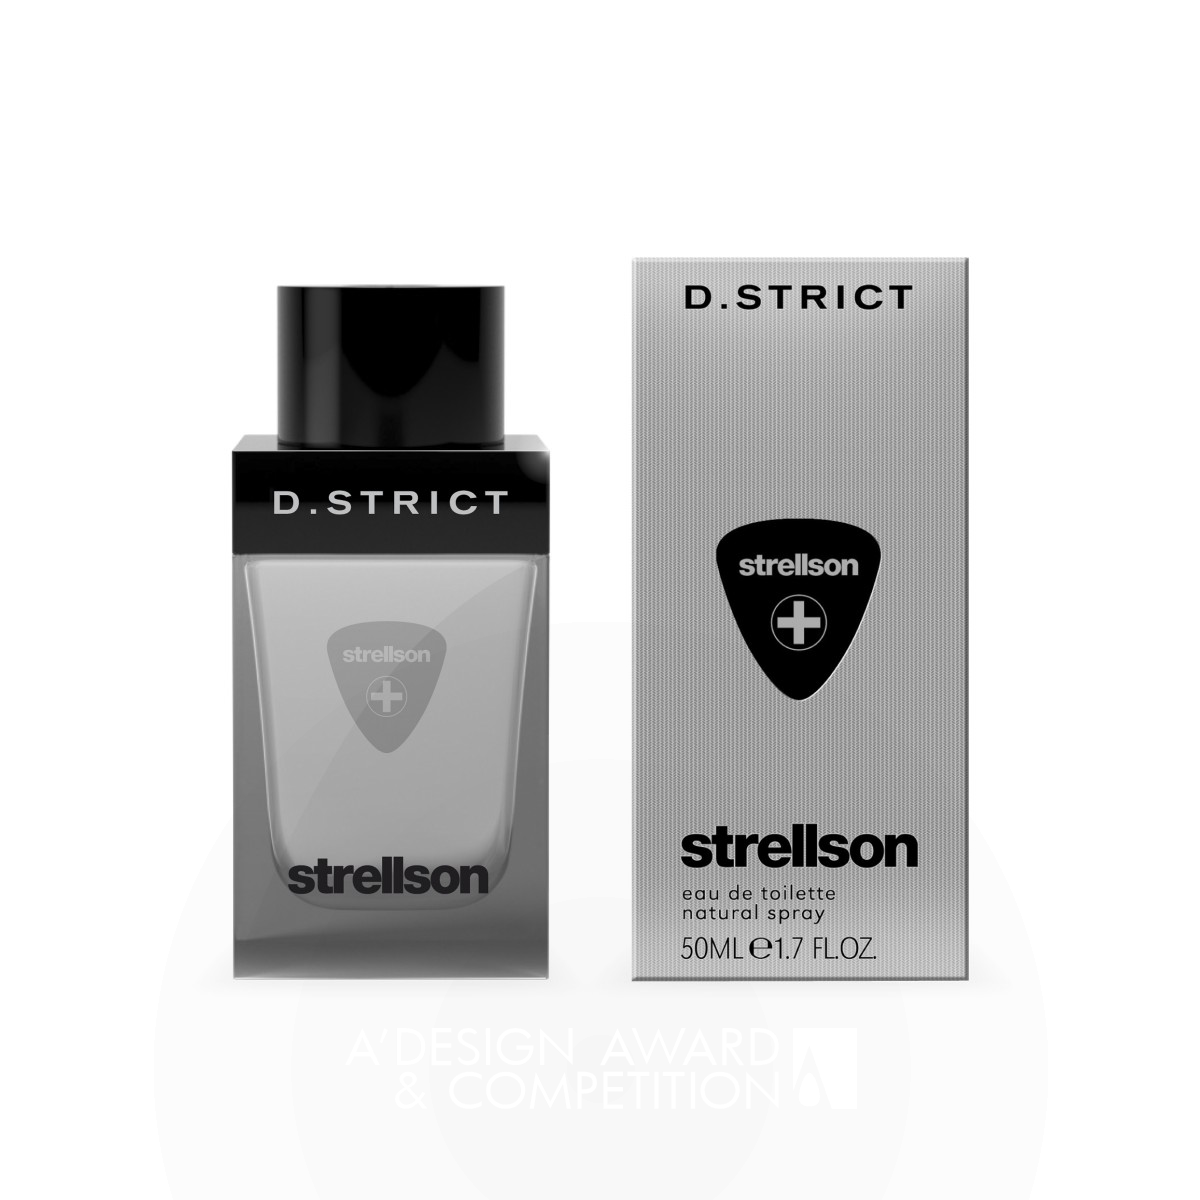 Strellson D.Strict Perfume by Peter Schmidt